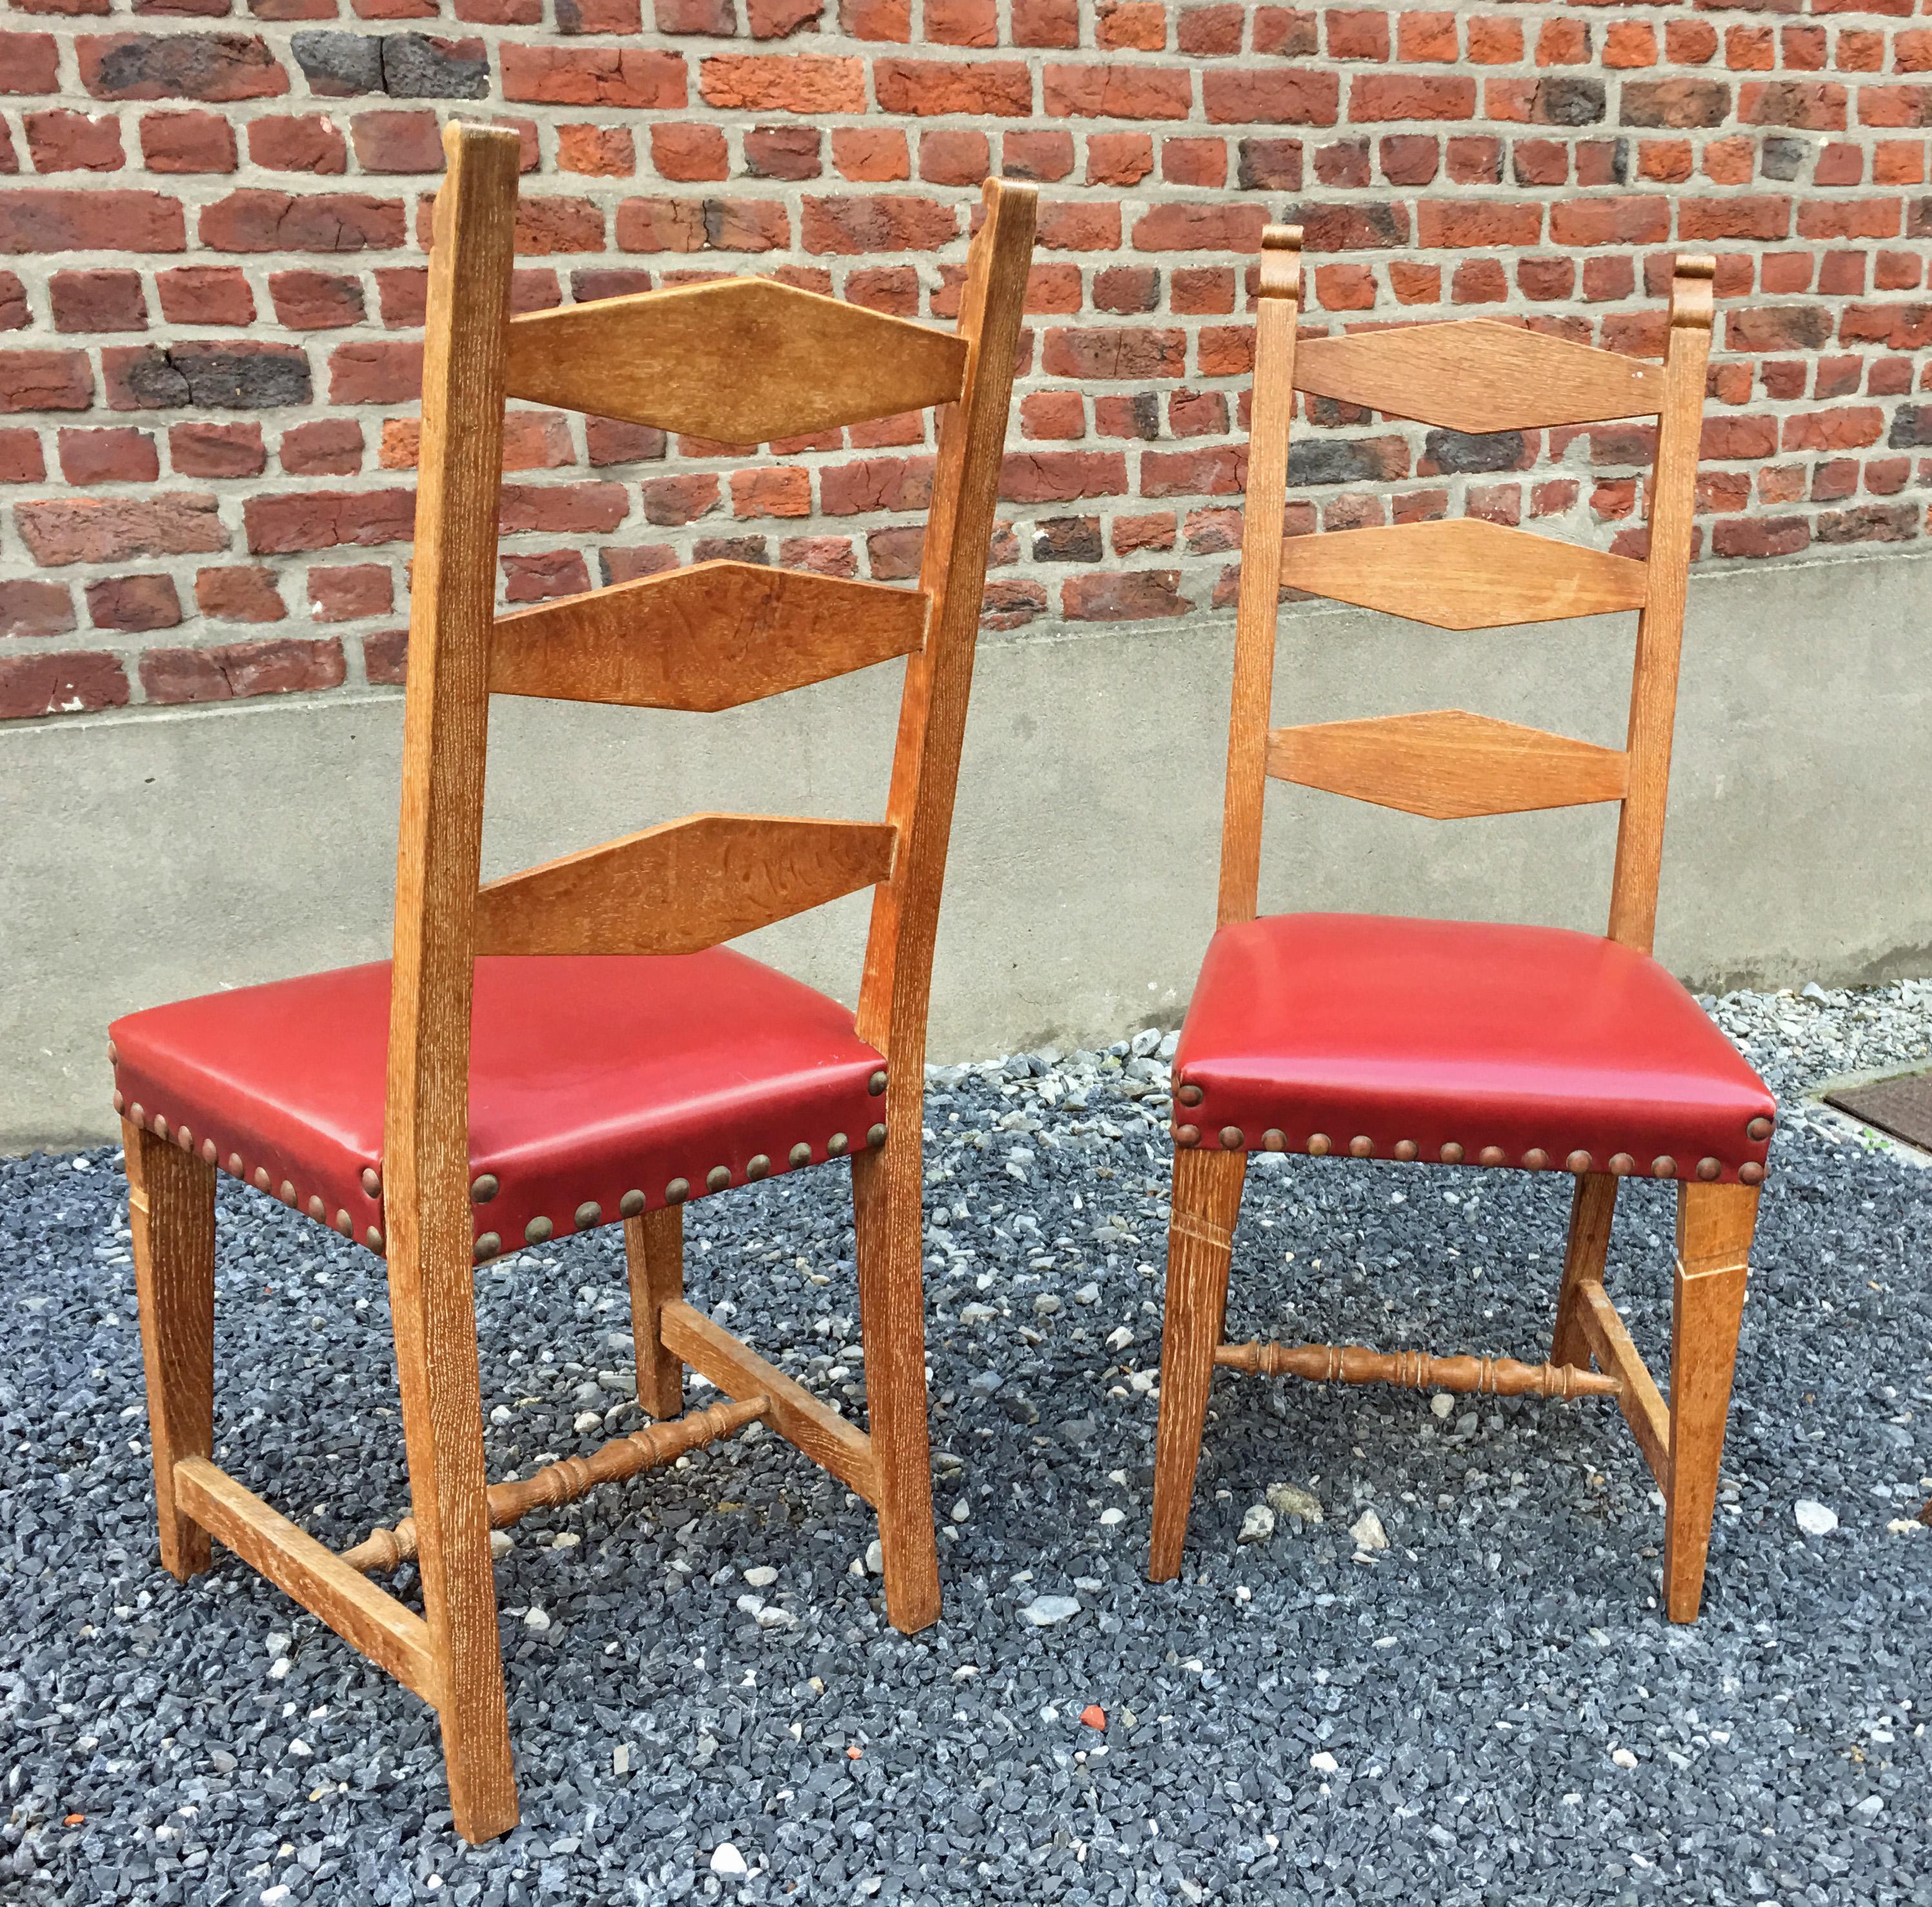 4 Stühle aus Eichenholz, Kunstlederbezug, um 1950.